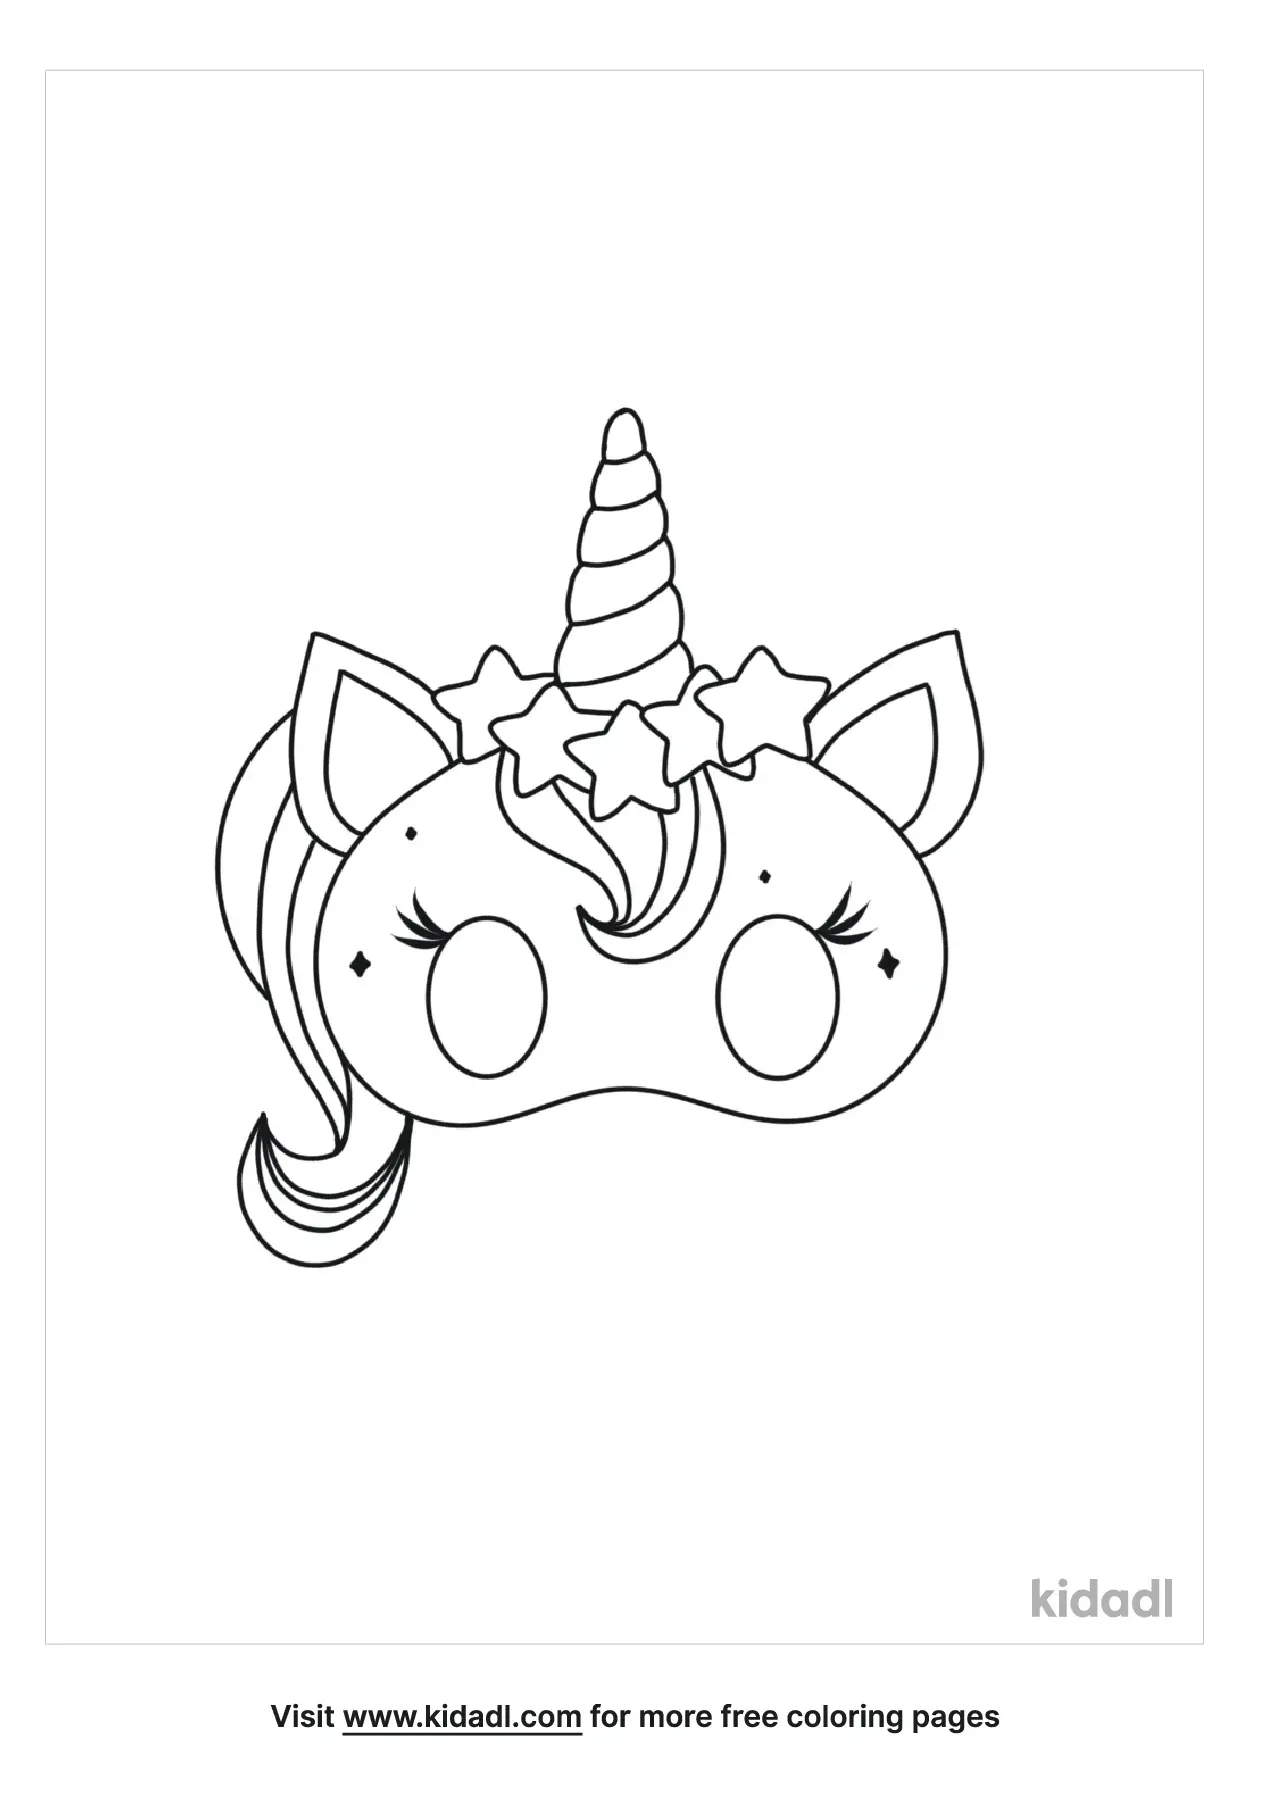 Free Unicorn Mask Coloring Page | Coloring Page Printables | Kidadl